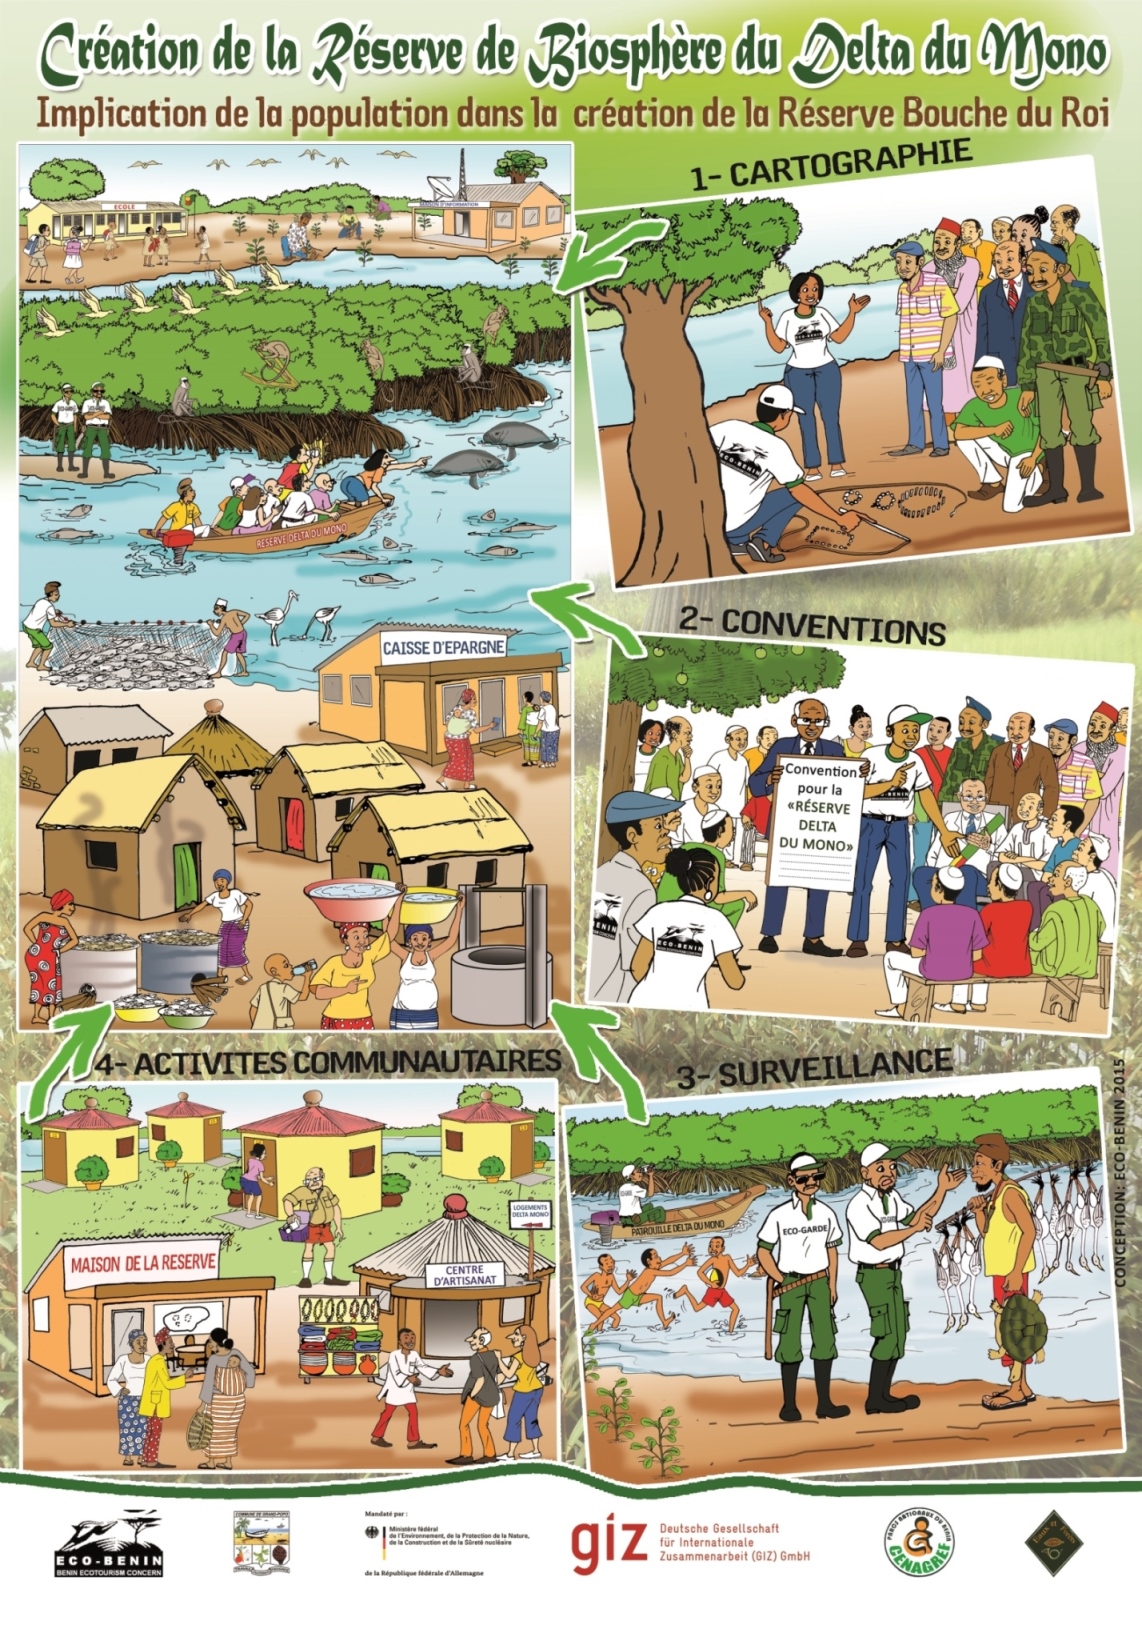 Poster sensibilisation sur creation Reserve Delta Mono-Eco-Benin 2015